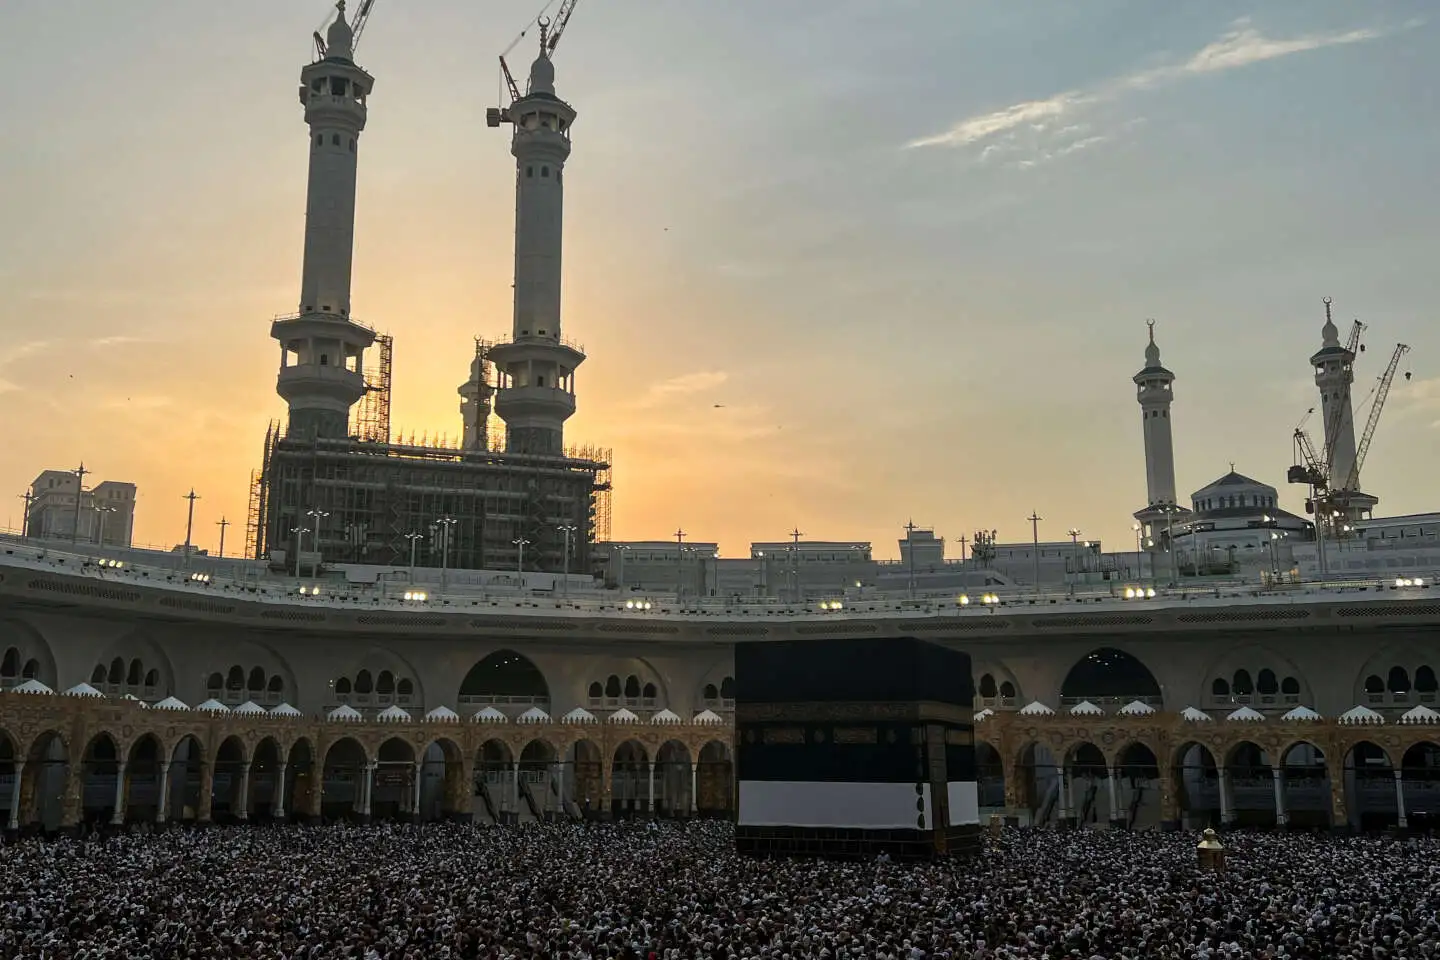 Death toll from heat at hajj pilgrimage in Saudi Arabia passes 900